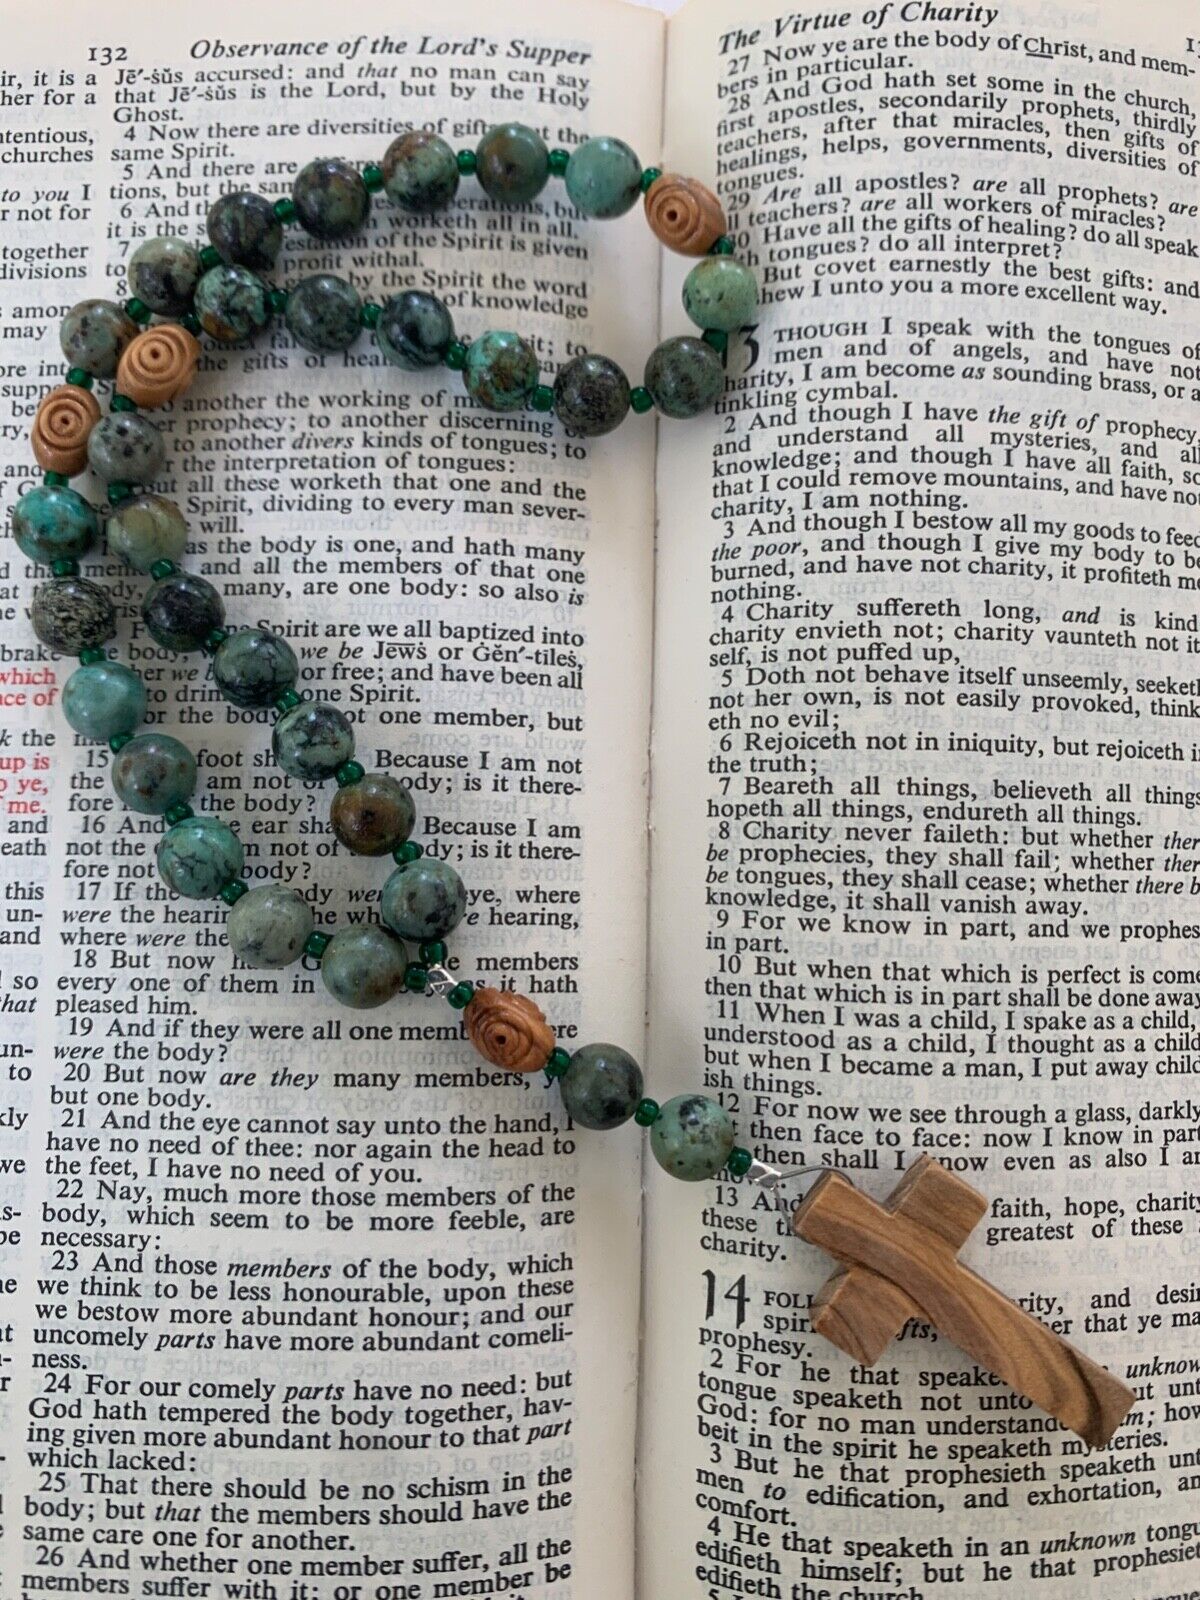 Protestant, Anglican, Episcopal, Lutheran, Methodist, Christian Prayer Beads